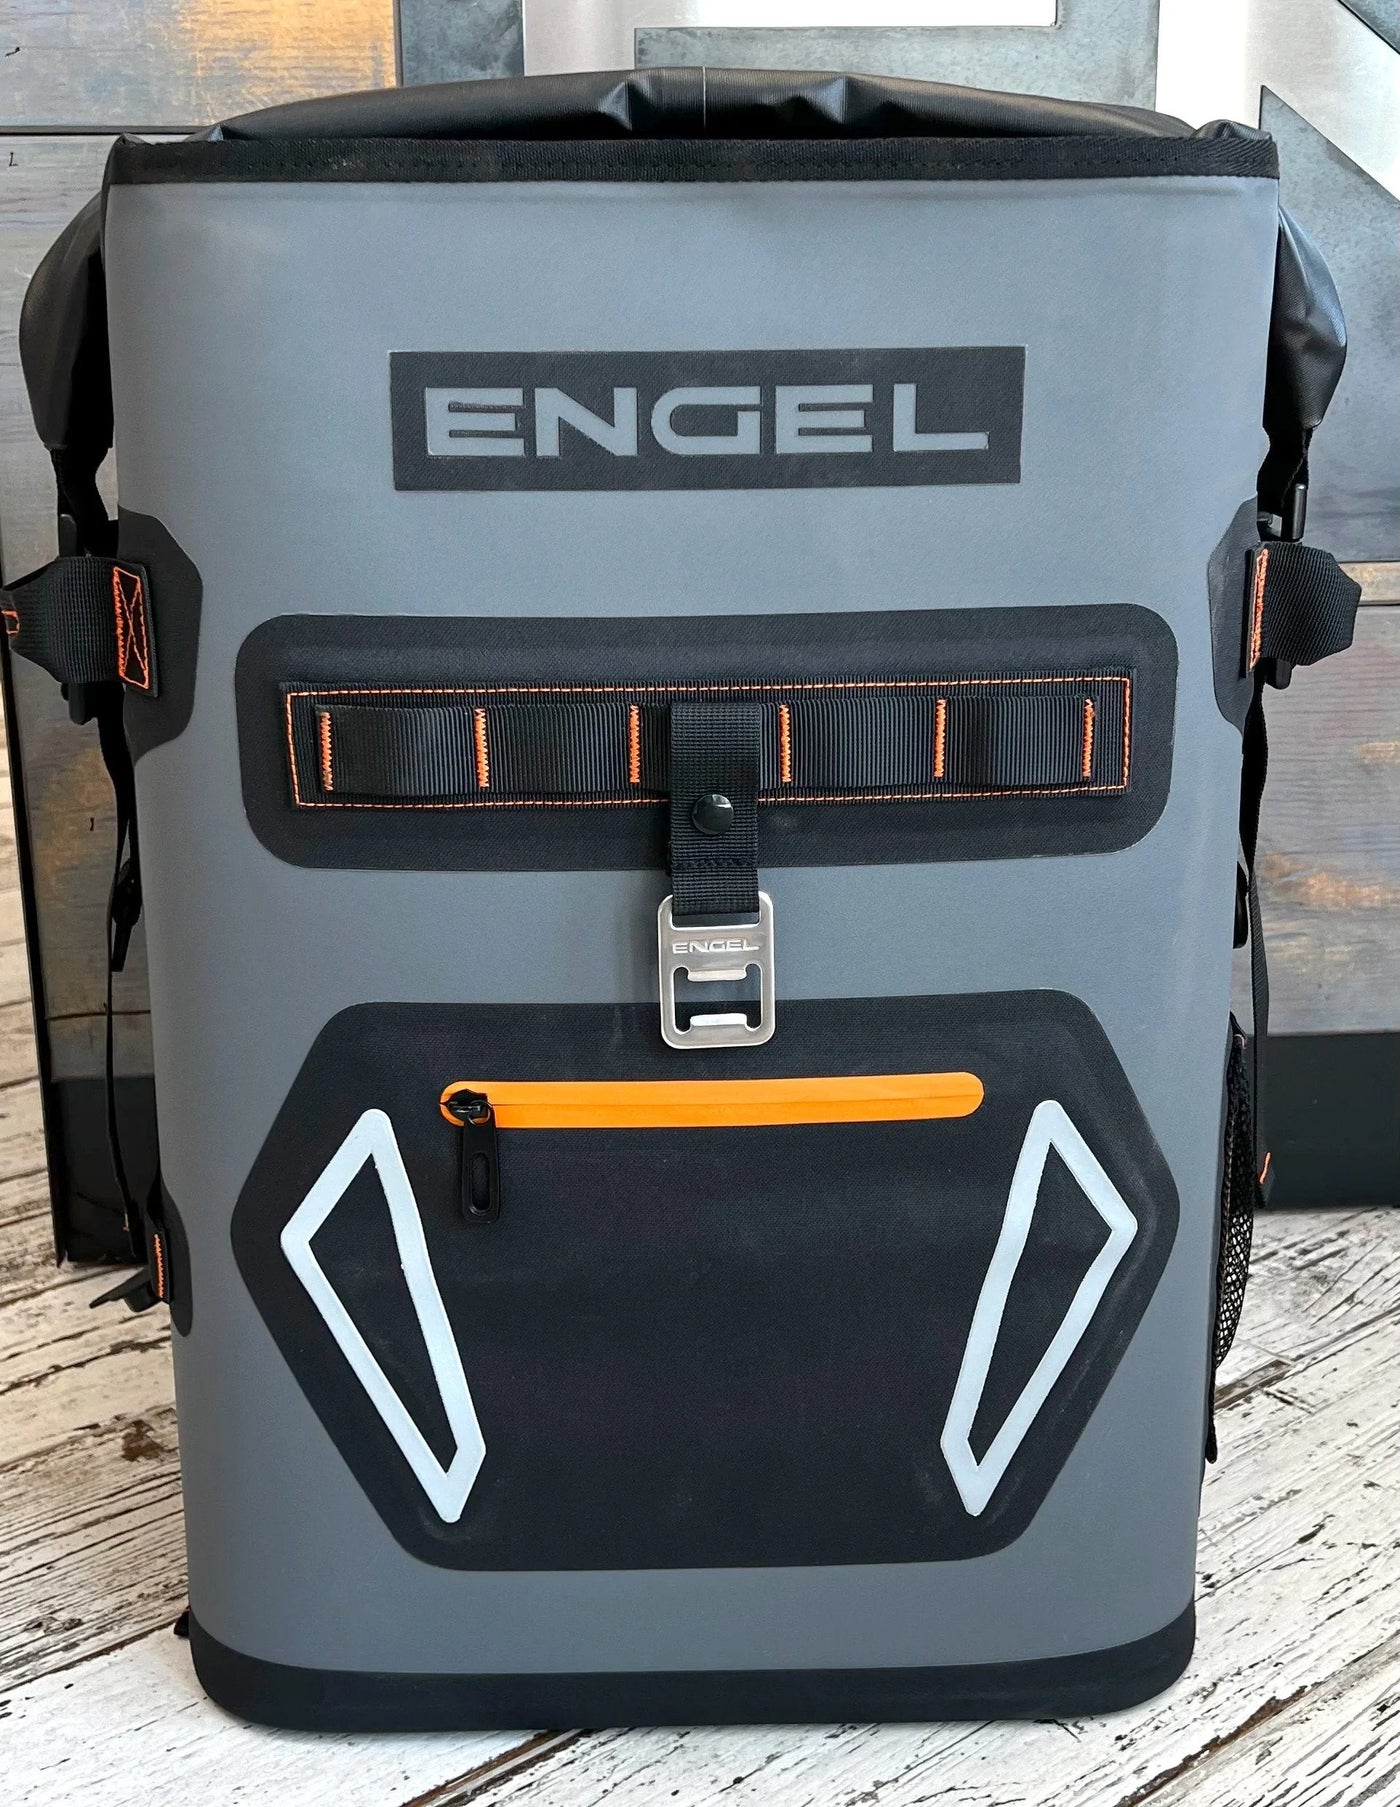 Engel® Roll Top High Performance Backpack Cooler Coolers Engel Coolers Orange 